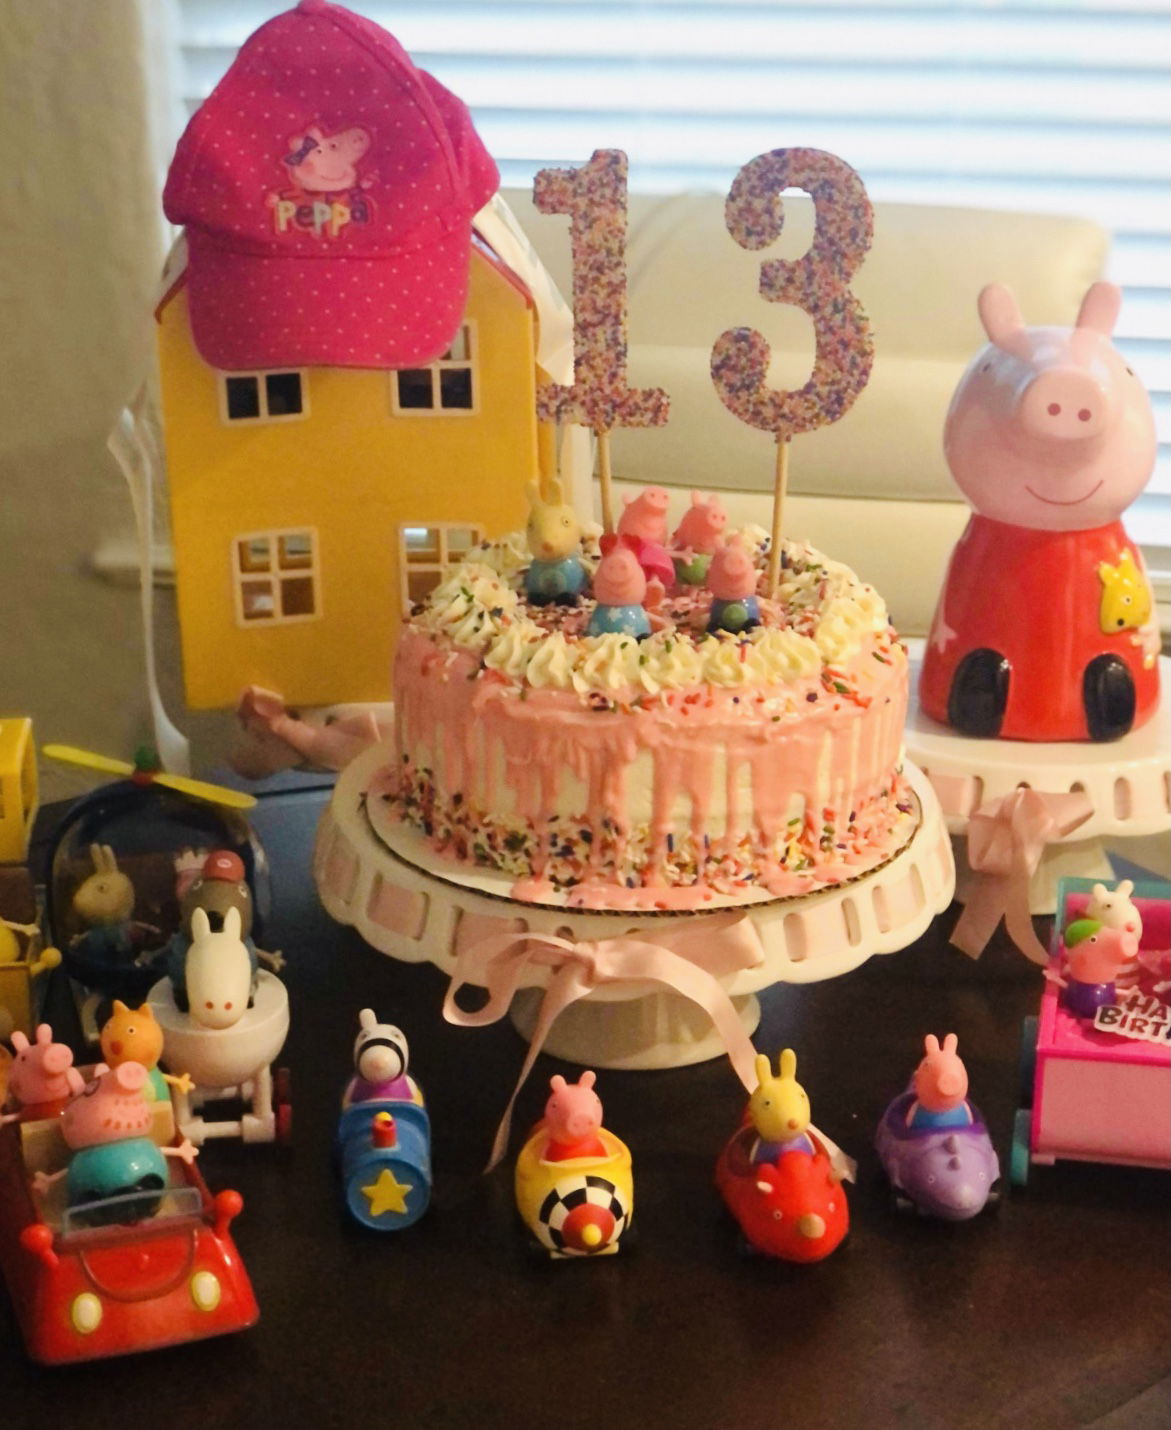 3 Layer Vanilla Peppa Pig Birthday Cake With Pink Ganache And Sprinkles